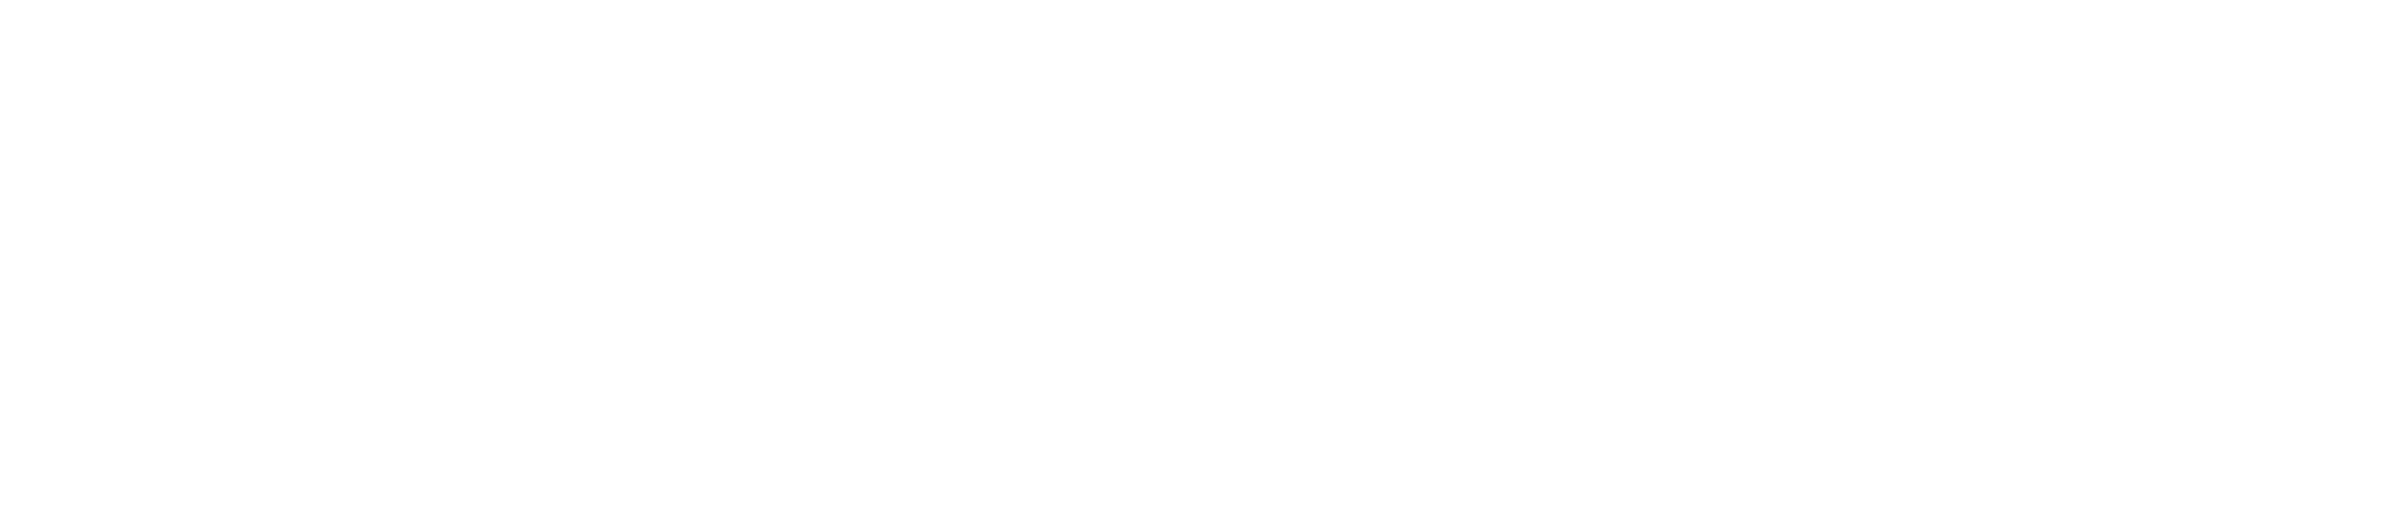 Crosshair Video Production company logo